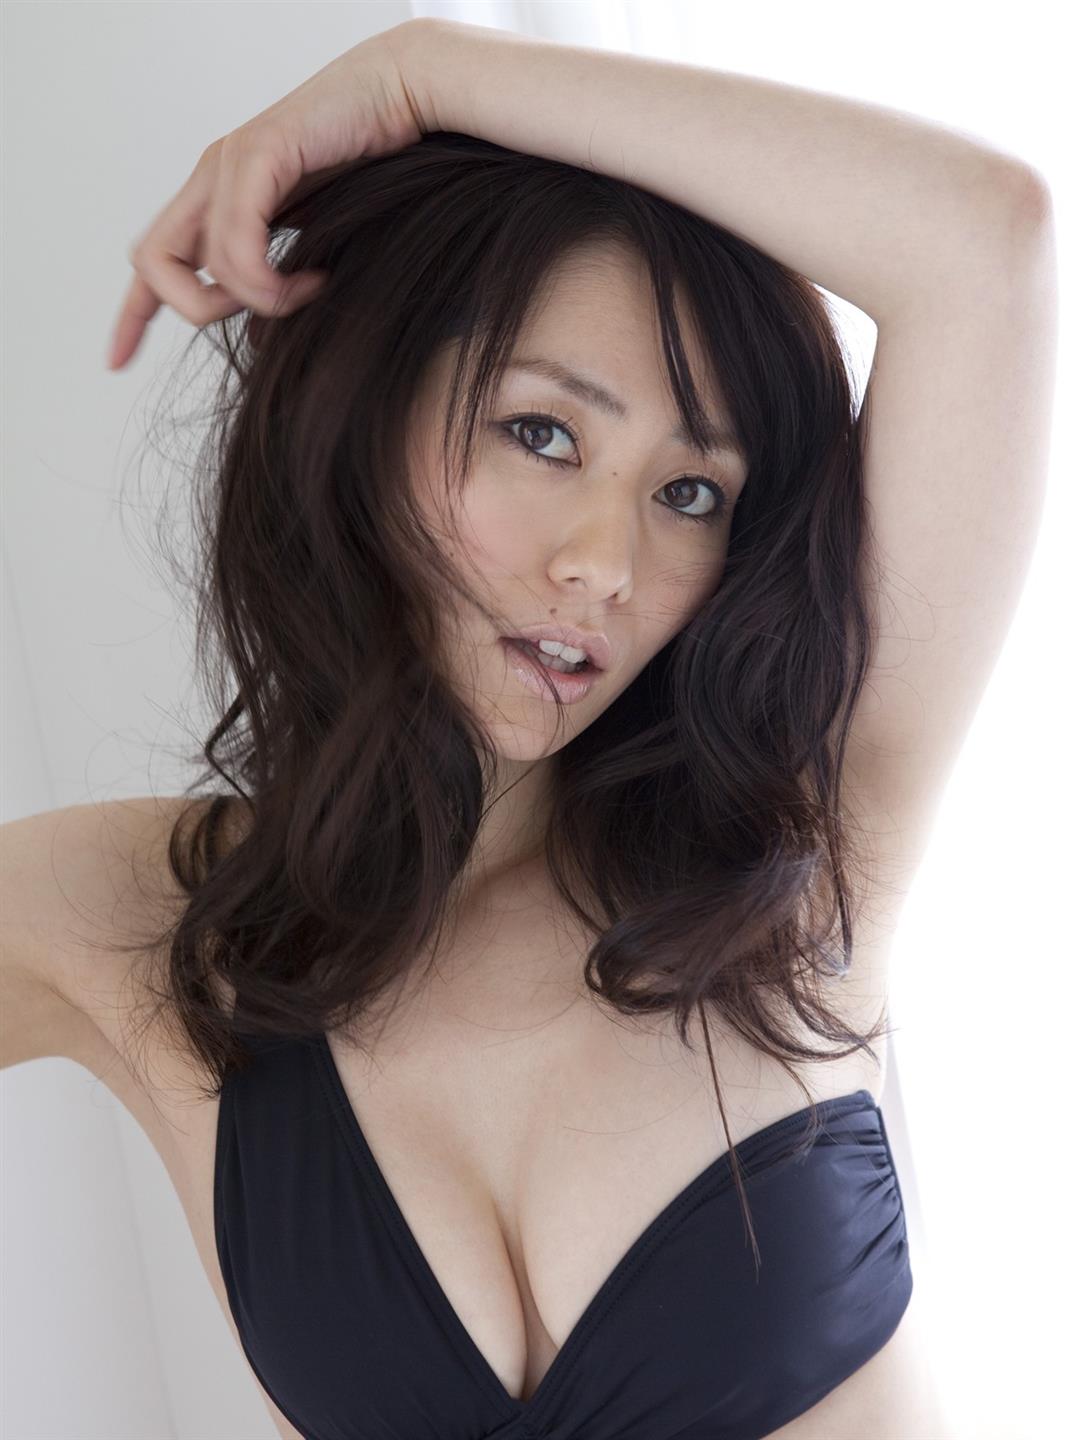 Sabra.net 谷桃子『桃子日和』 NEW COVER GIRL 唯美日本美女套图 - 18.jpg